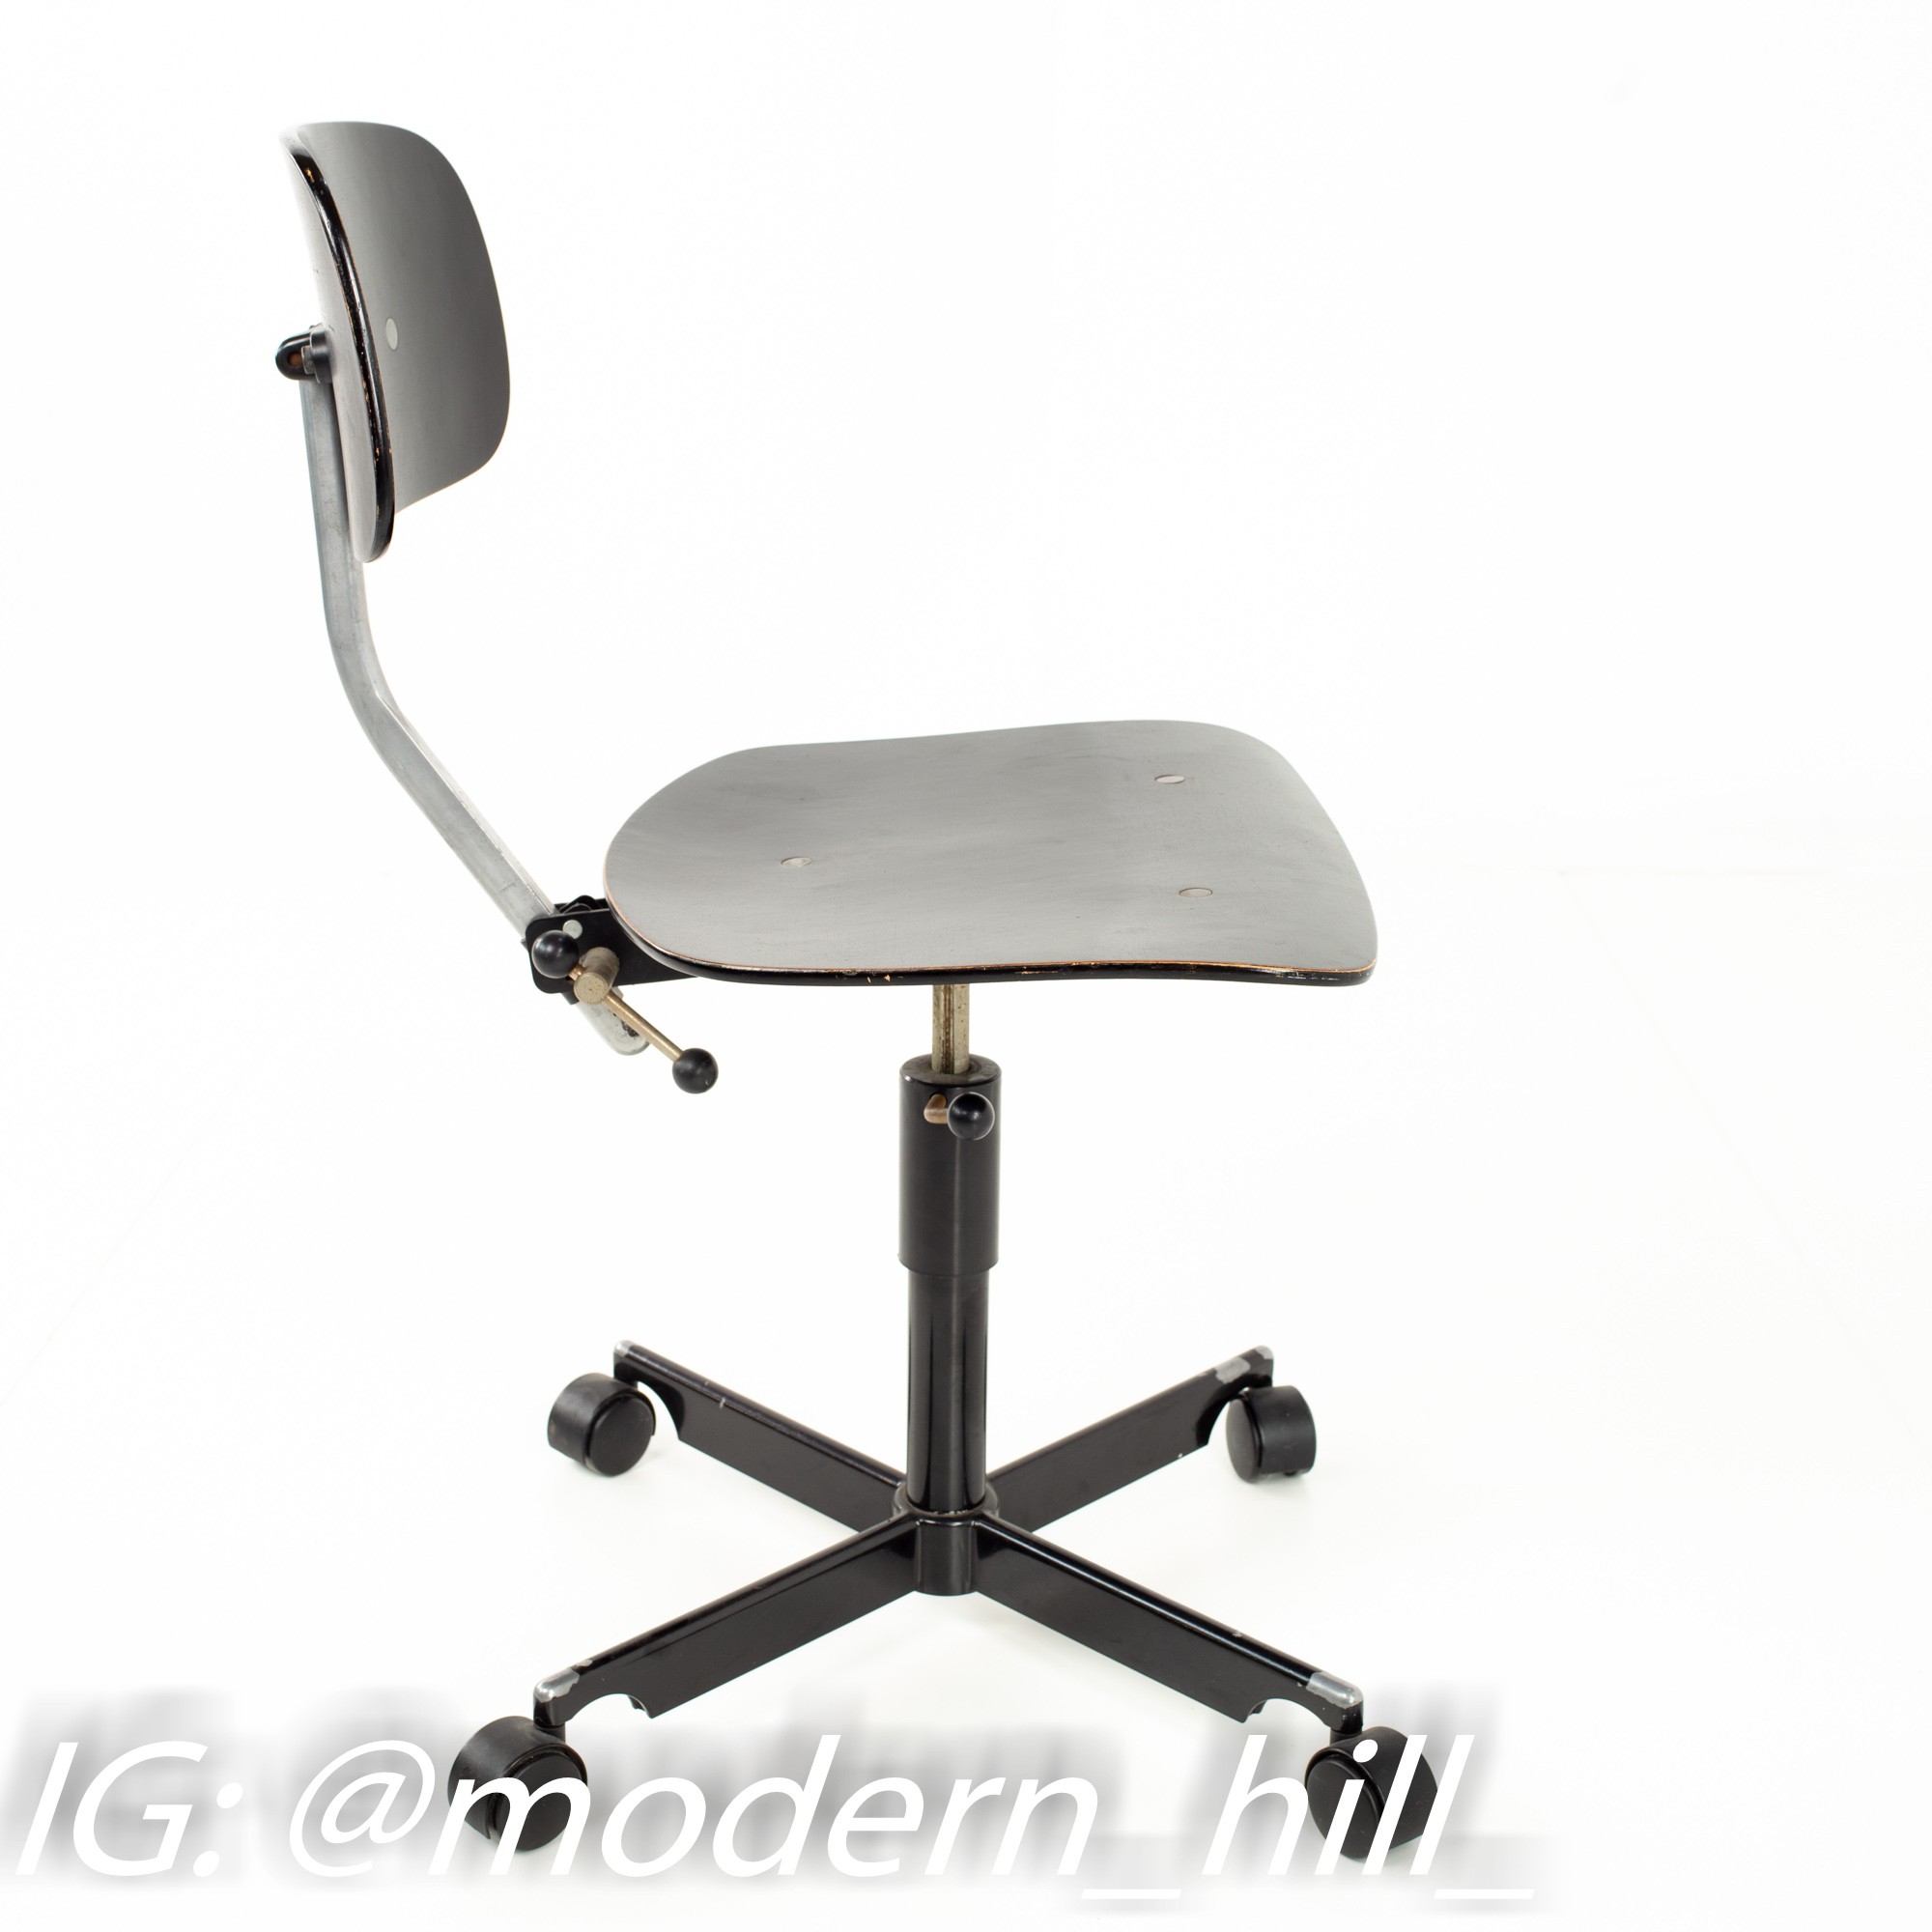 Jorgen Rasmussen Kevi Mid Century Black and Chrome Desk Task Chair